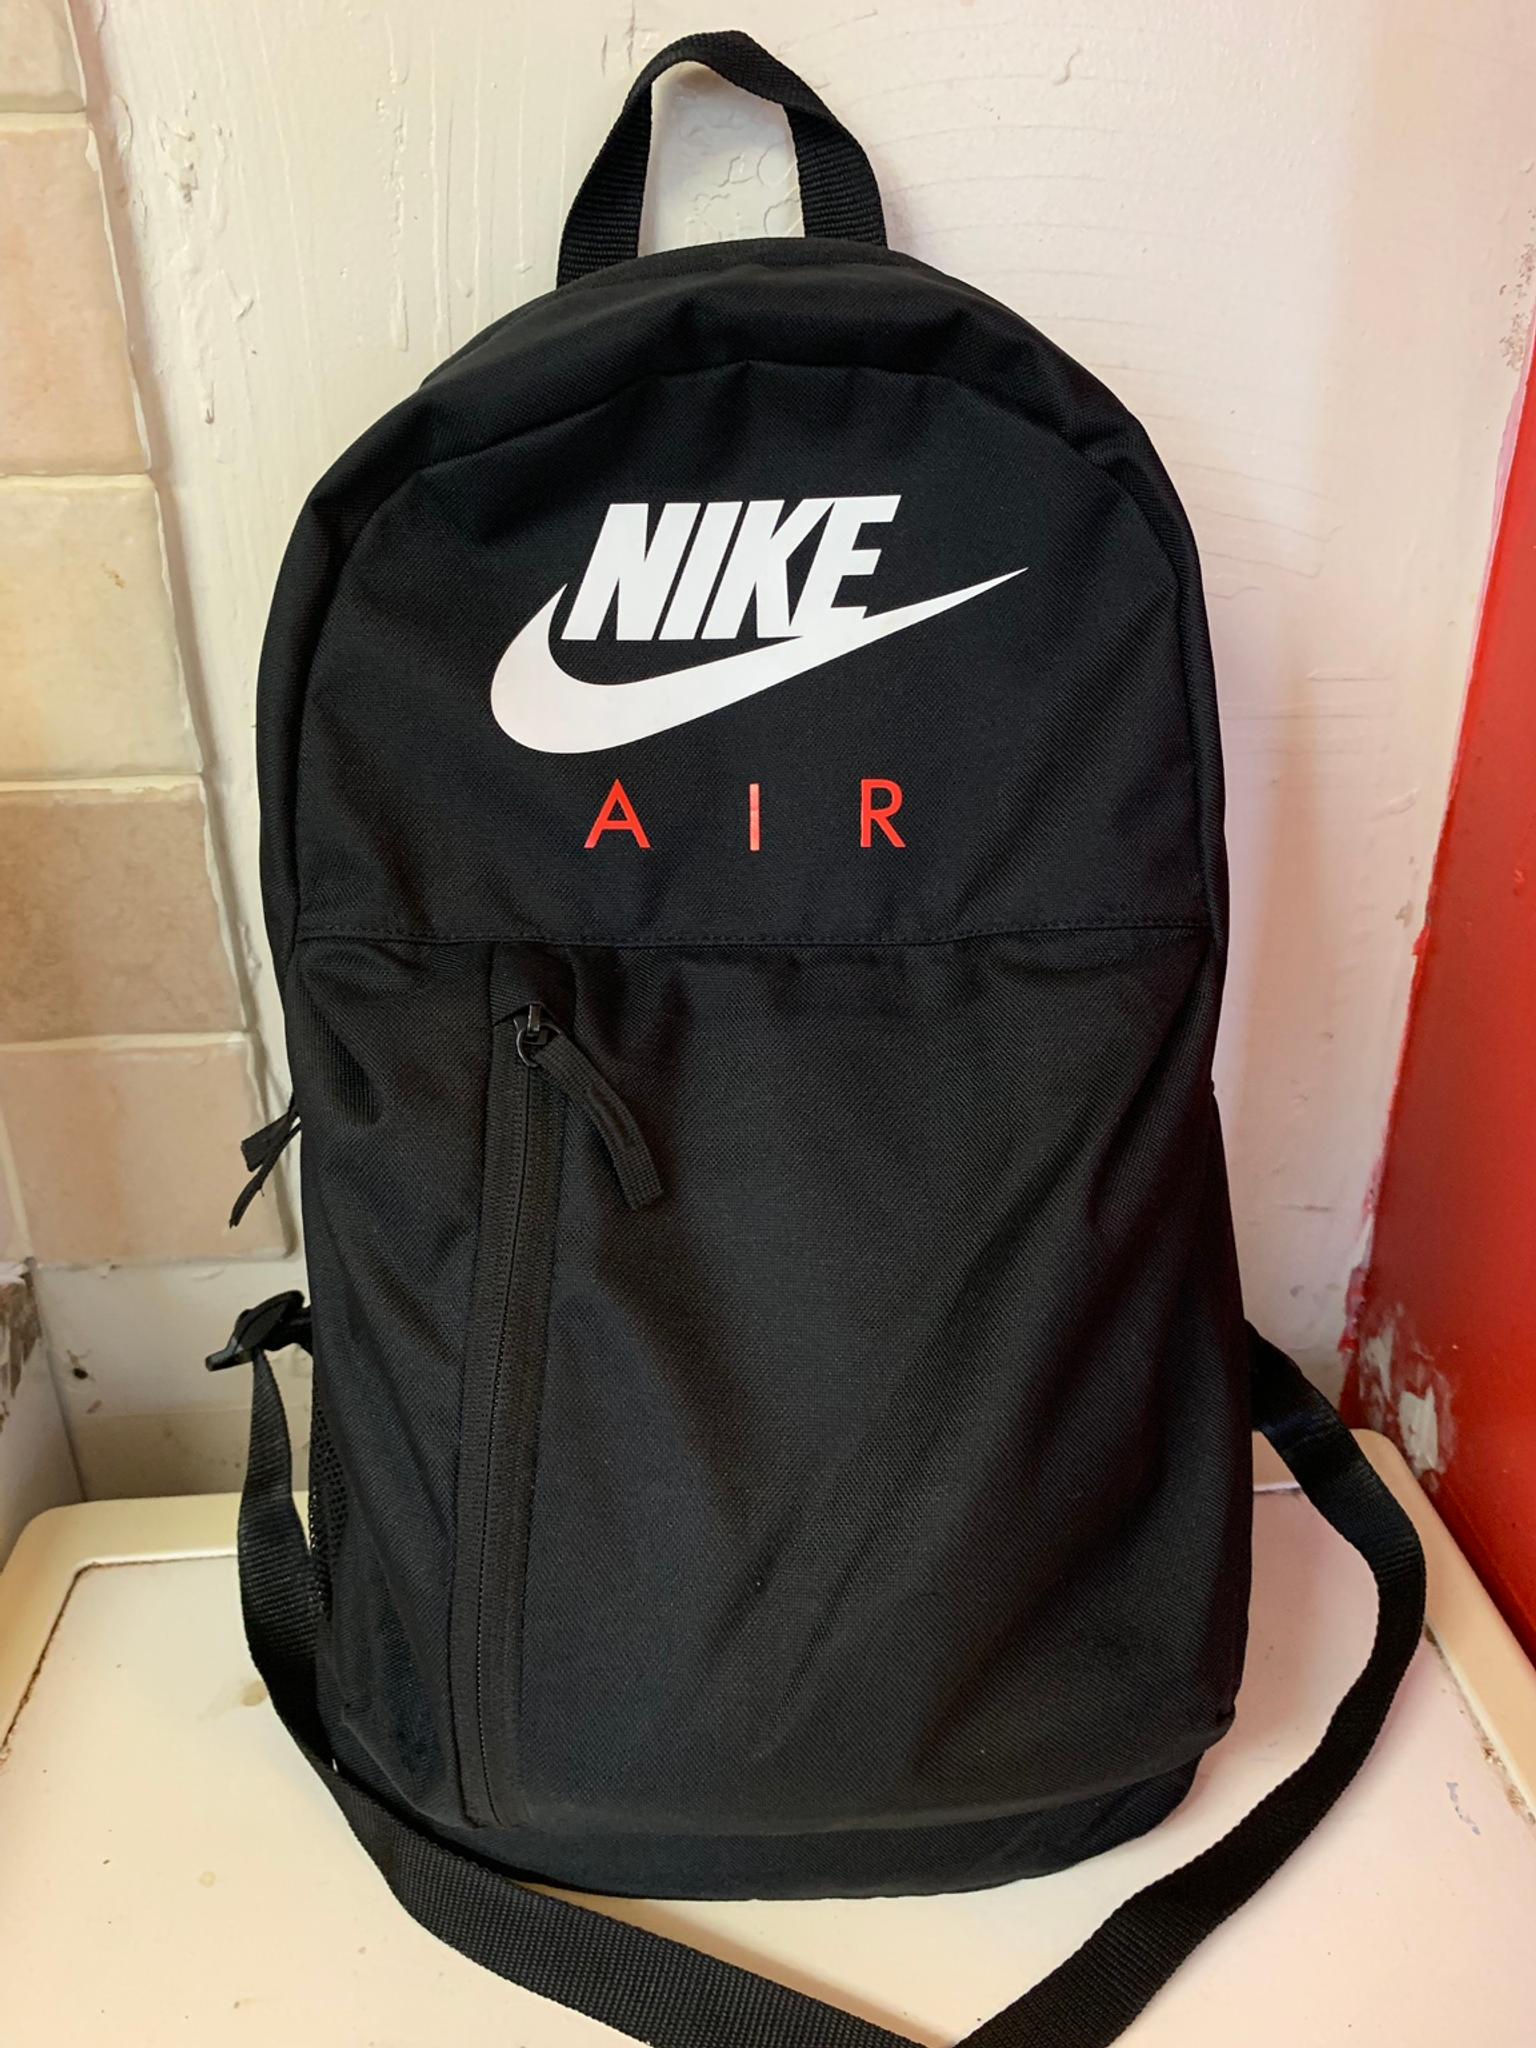 nike air bag black